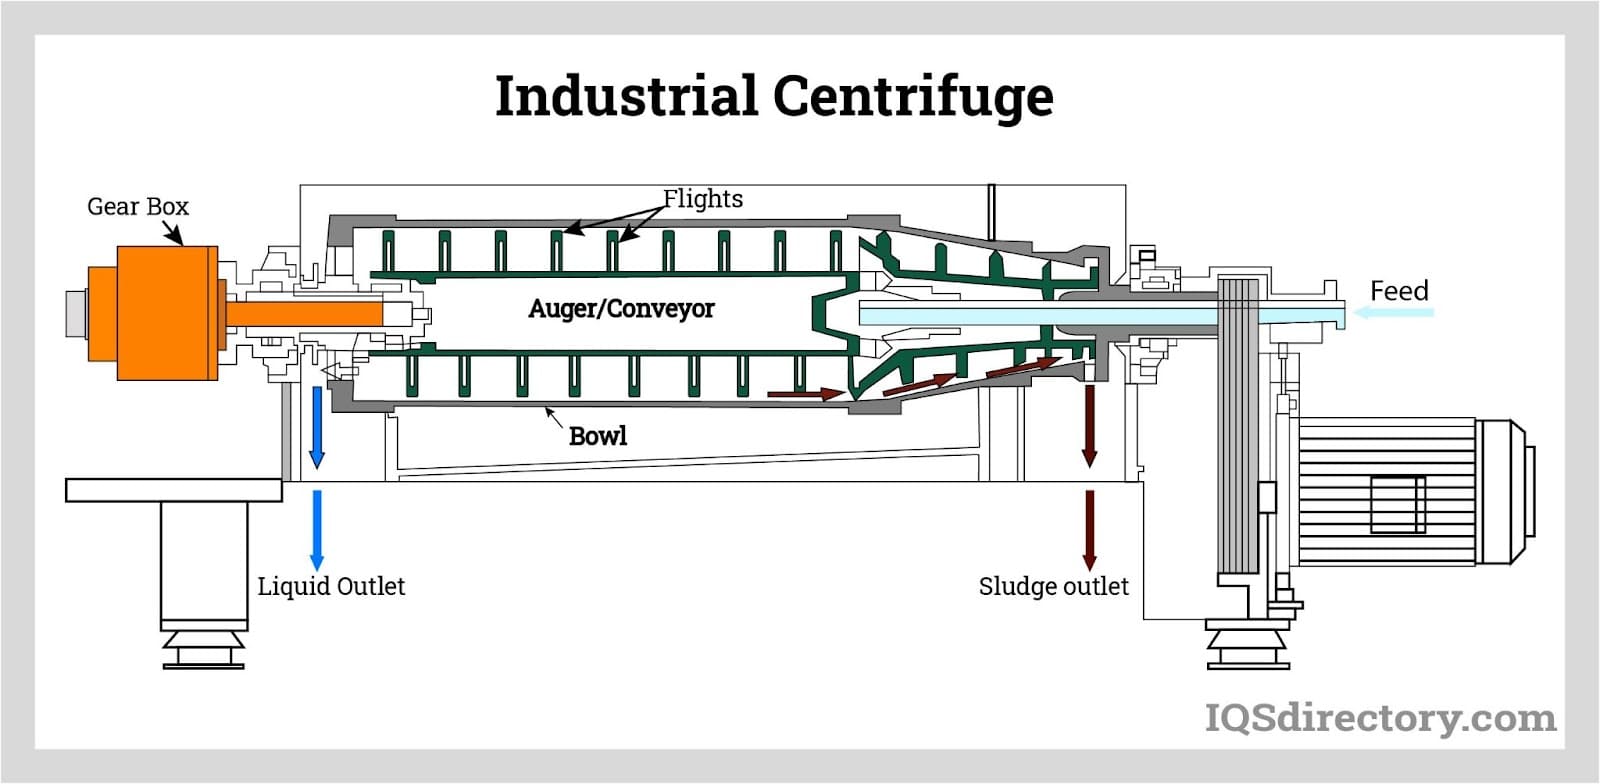 Industrial Centrifuge